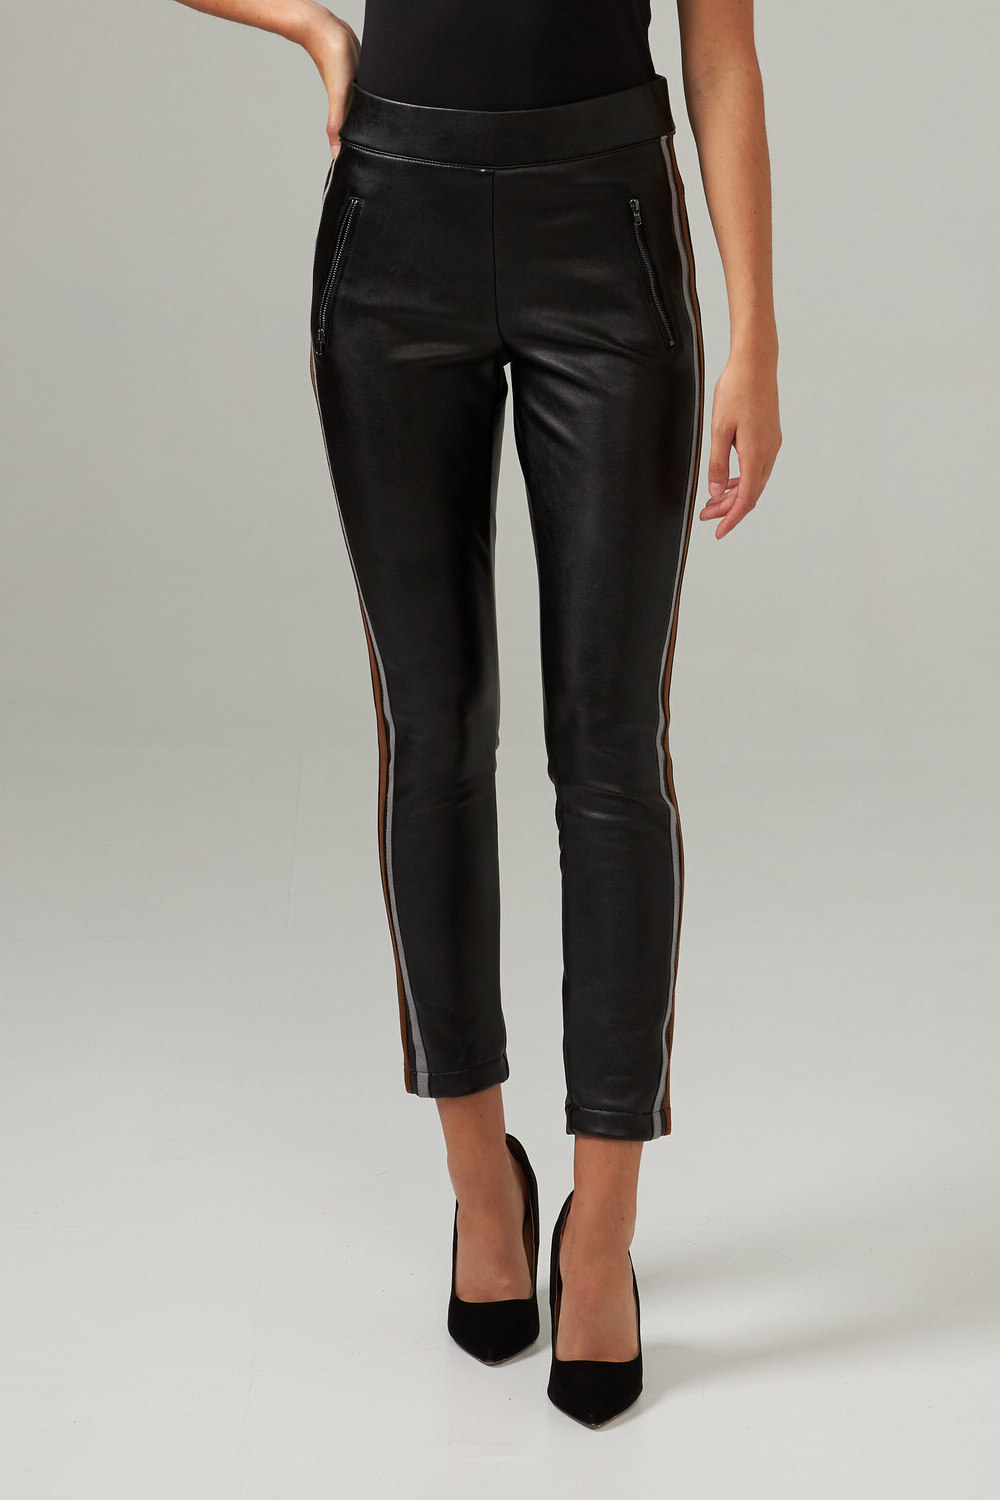 Joseph Ribkoff Striped Faux Leather Pants Style 203535. Black/brown/grey